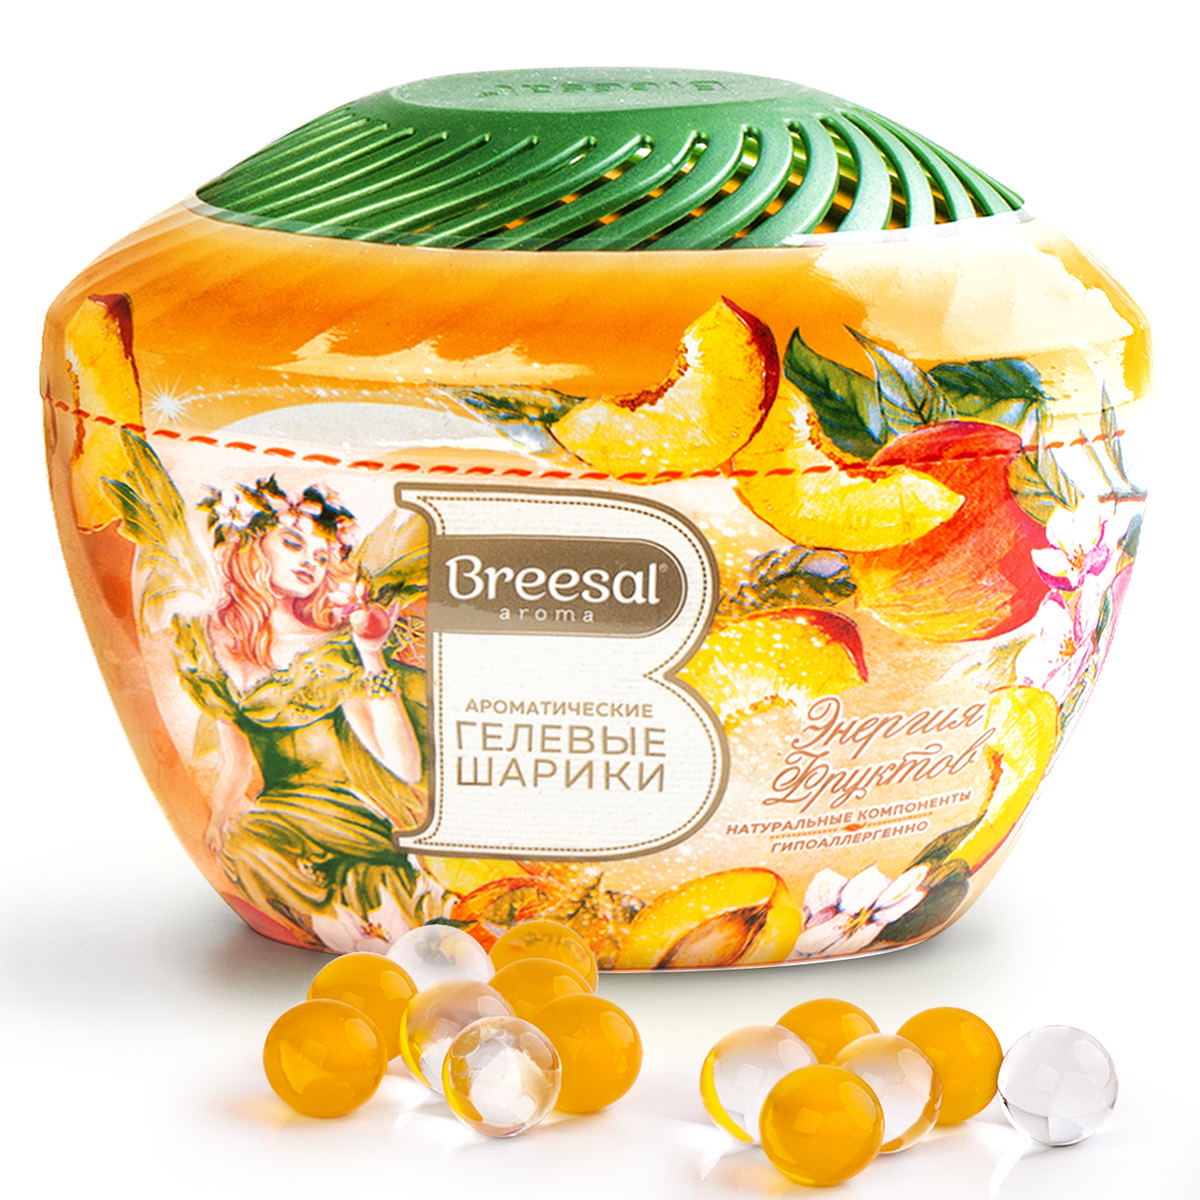 Ароматические гелевые шарики Breesal Fresh Drops Энергия фруктов, 215 мл ароматические гелевые шарики для дома breesal тропический рай 160 мл